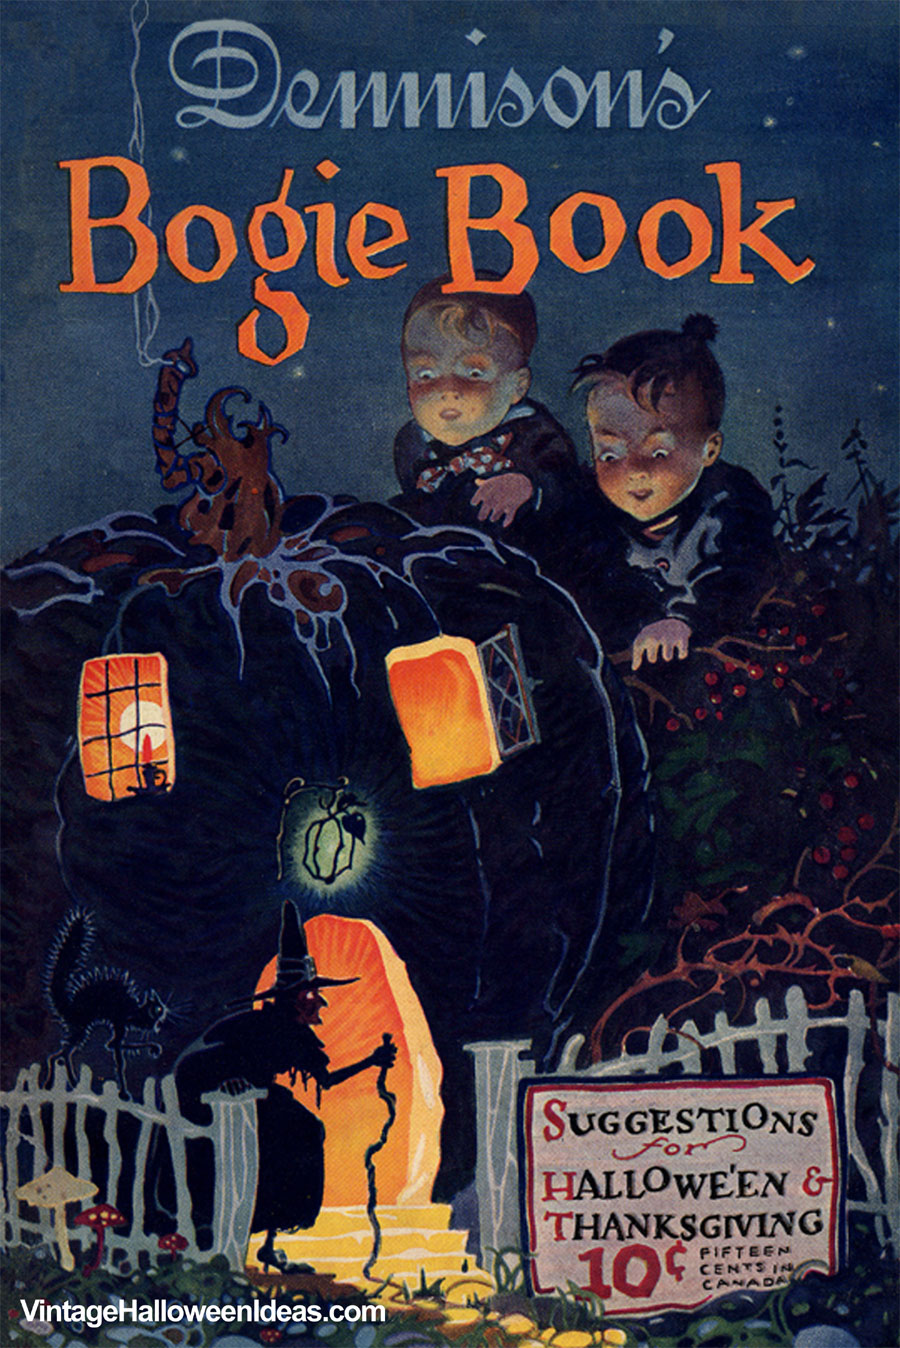 1925 Dennison's Bogie Book http://vintageinfo.net/downloads/1925-dennisons-bogie-book/